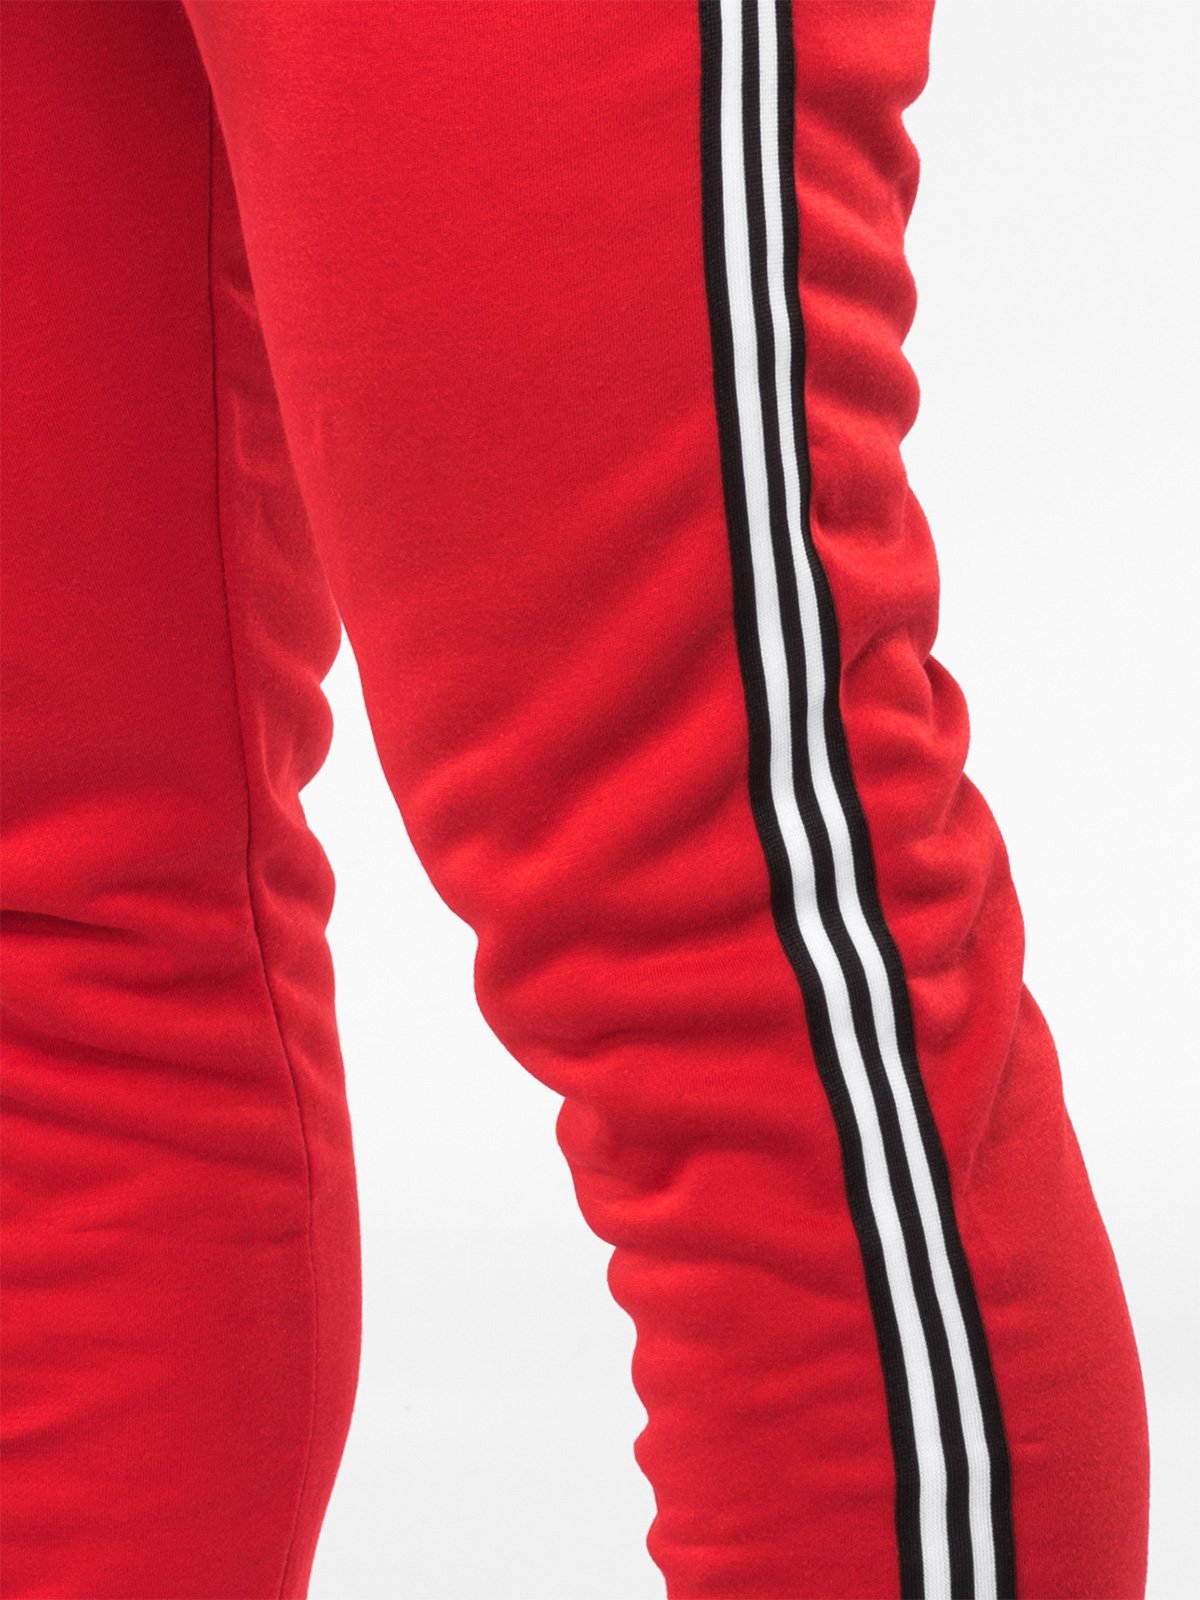 Men's sweatpants P719 - red | MODONE wholesale - Clothing For Men